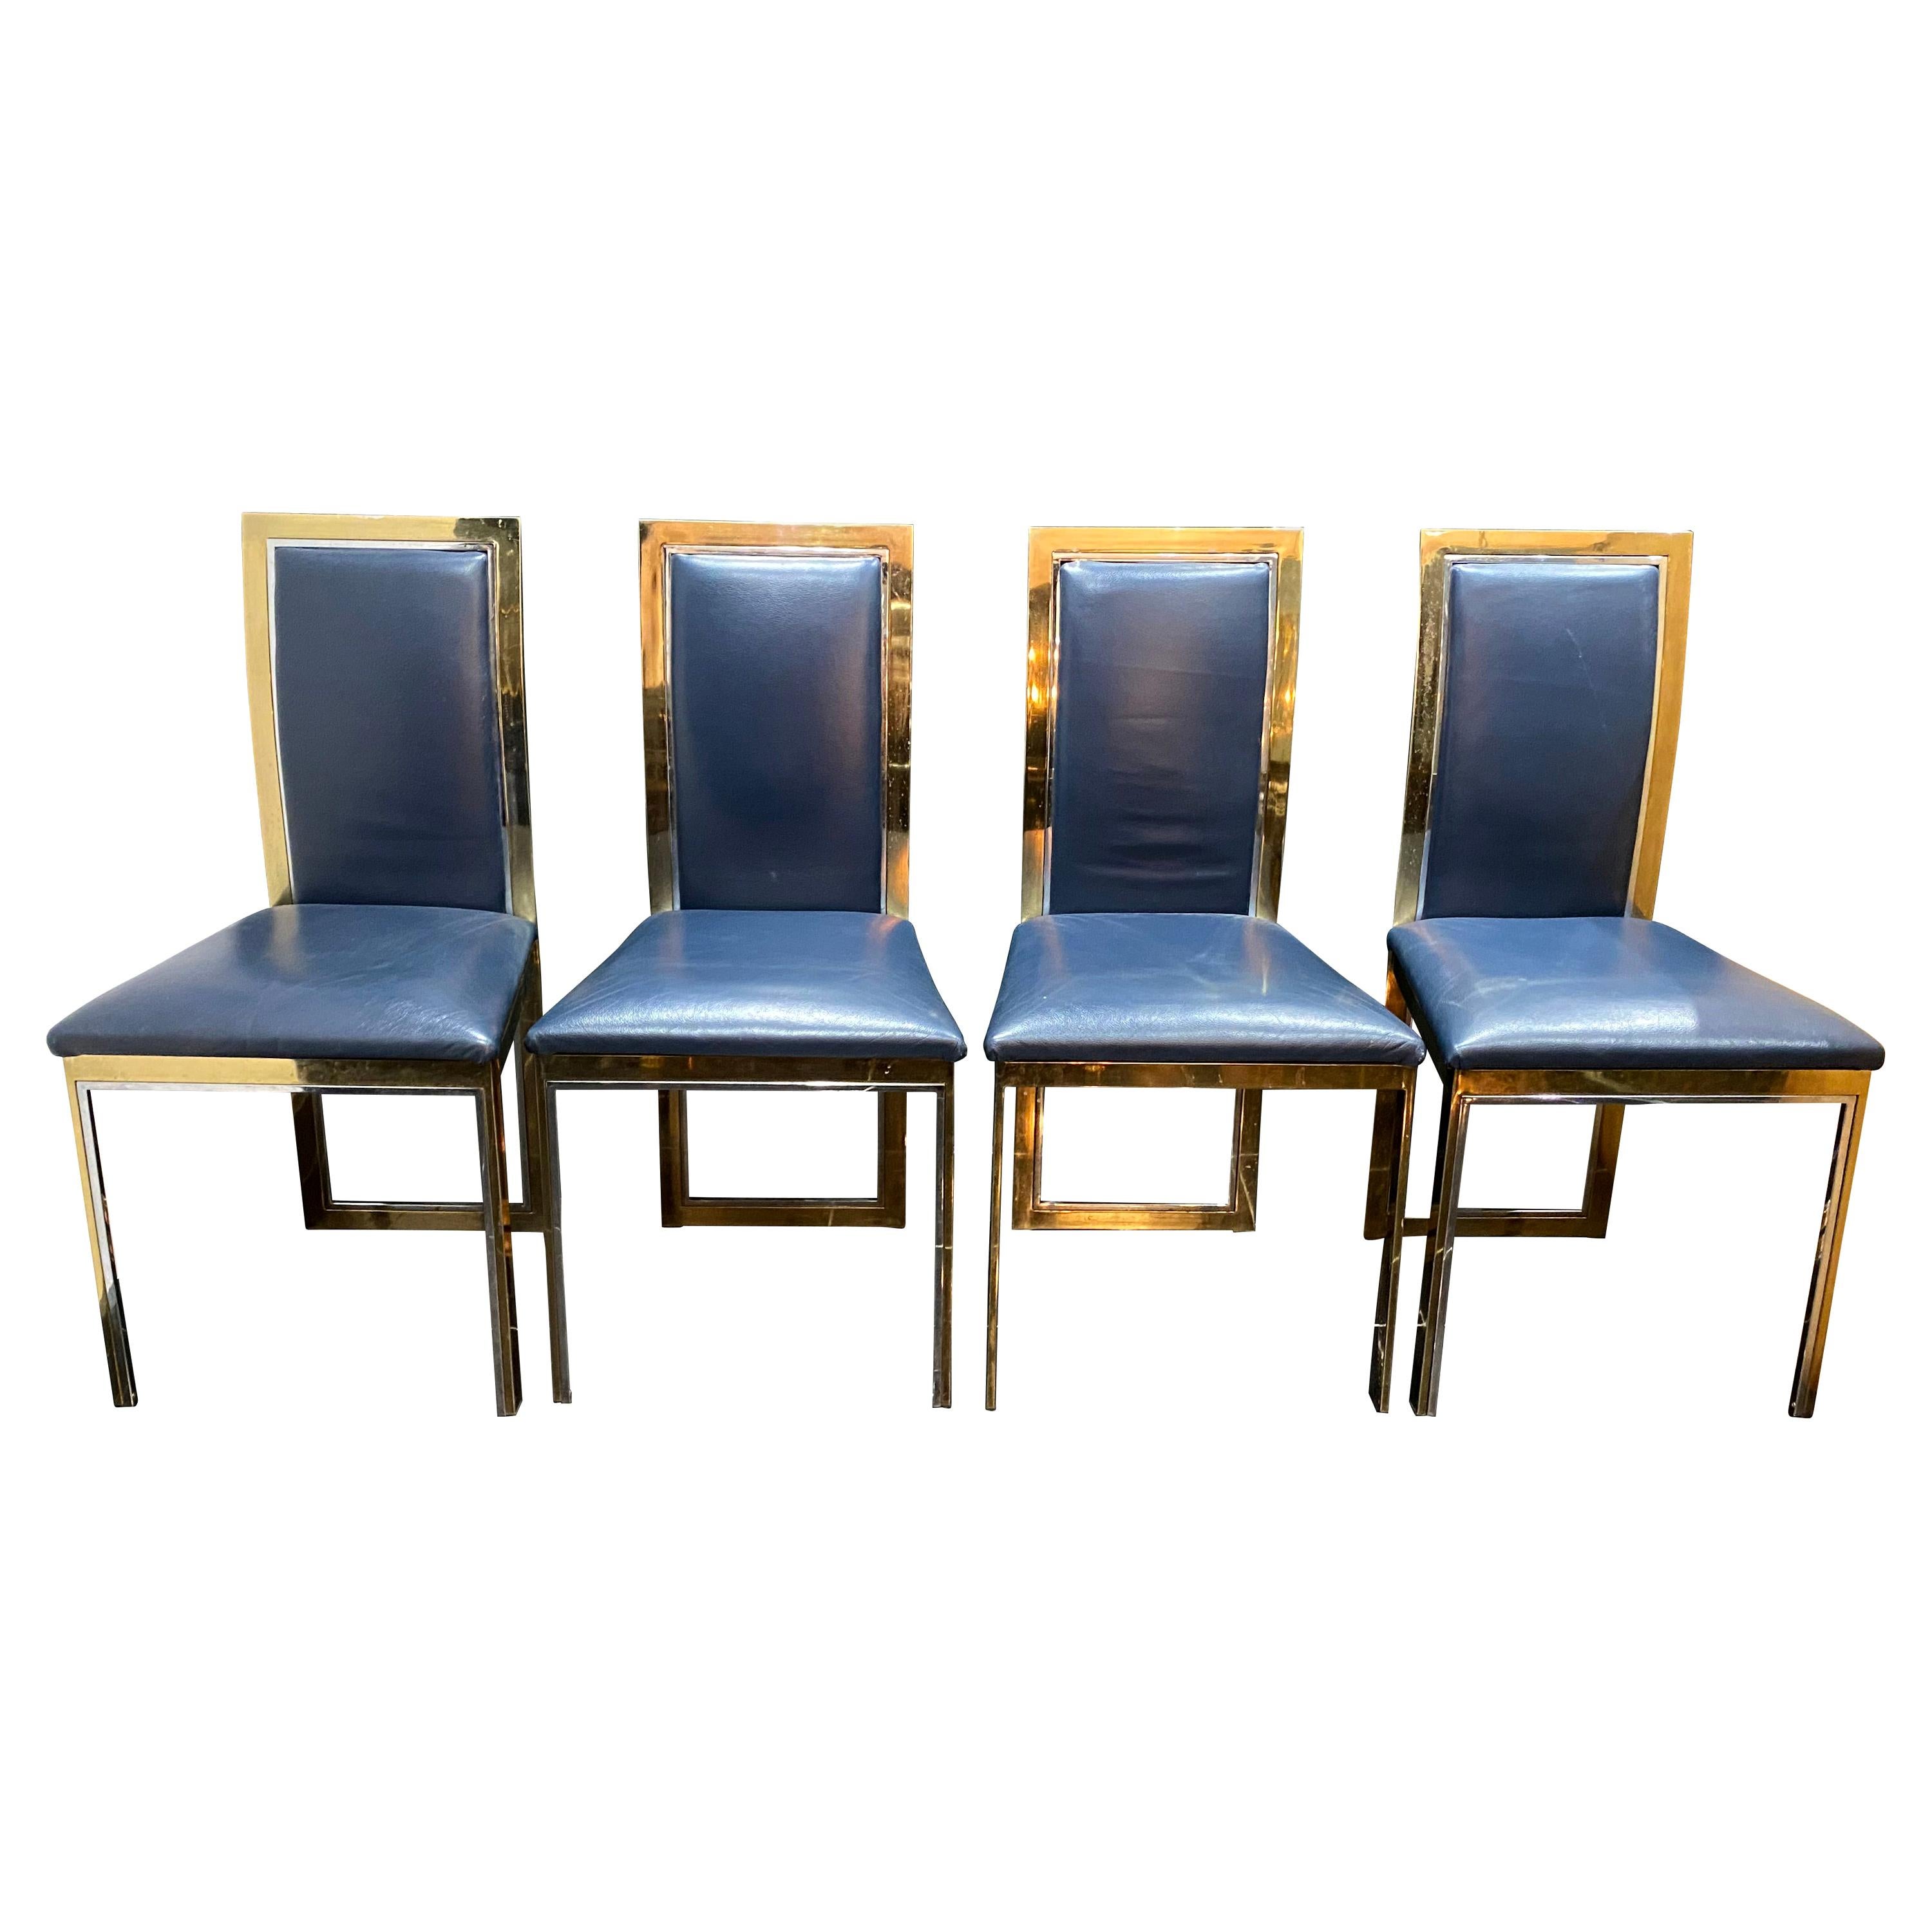 1970s Italian Romeo Rega Set of 4 Dining Chairs